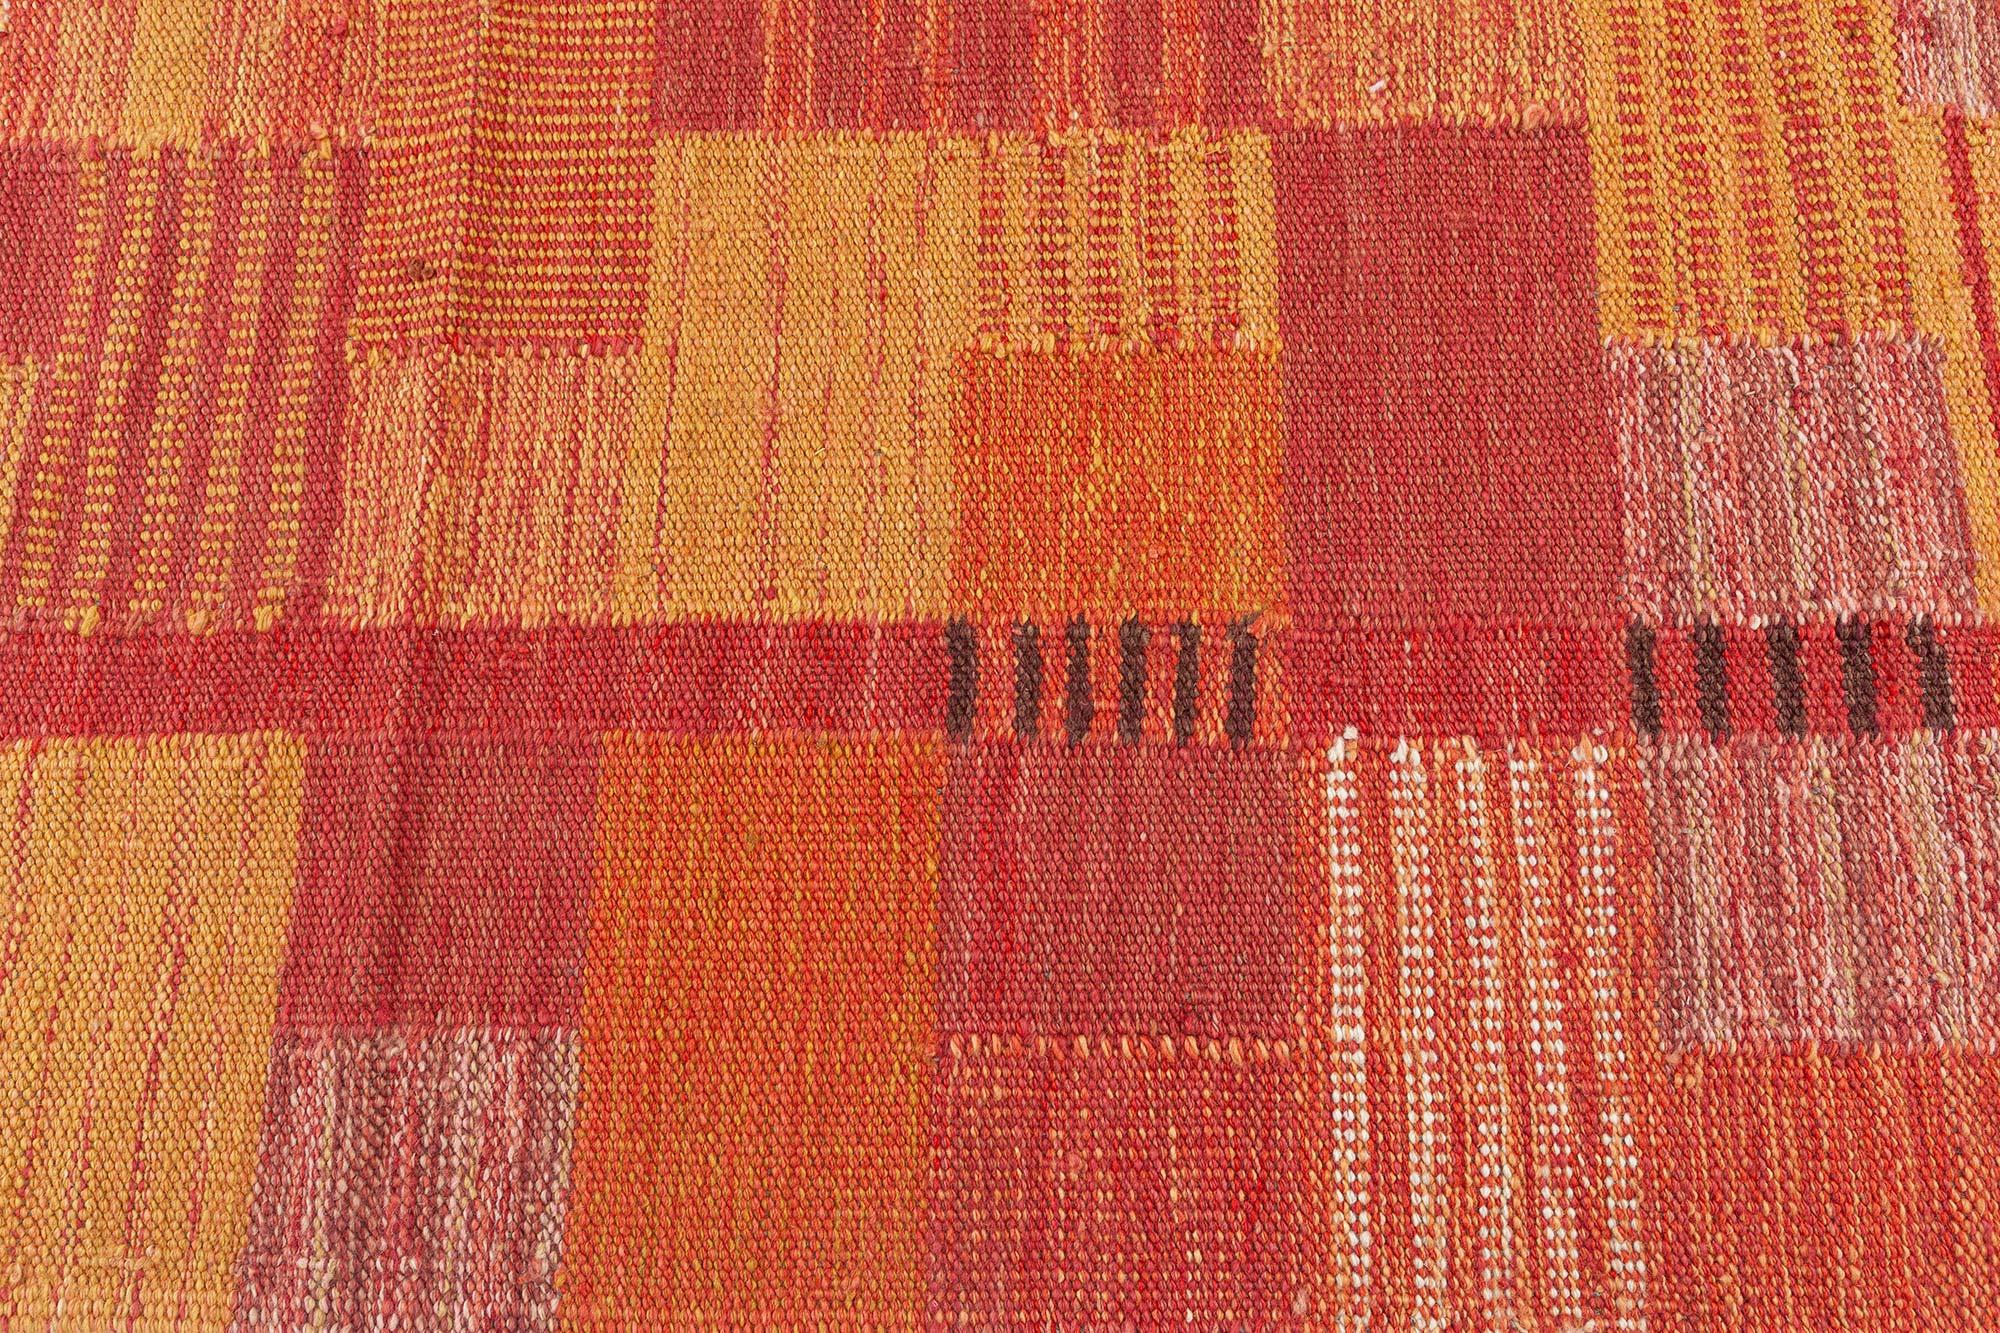 Modern Swedish flat weave rug by Doris Leslie Blau
Size: 5'8